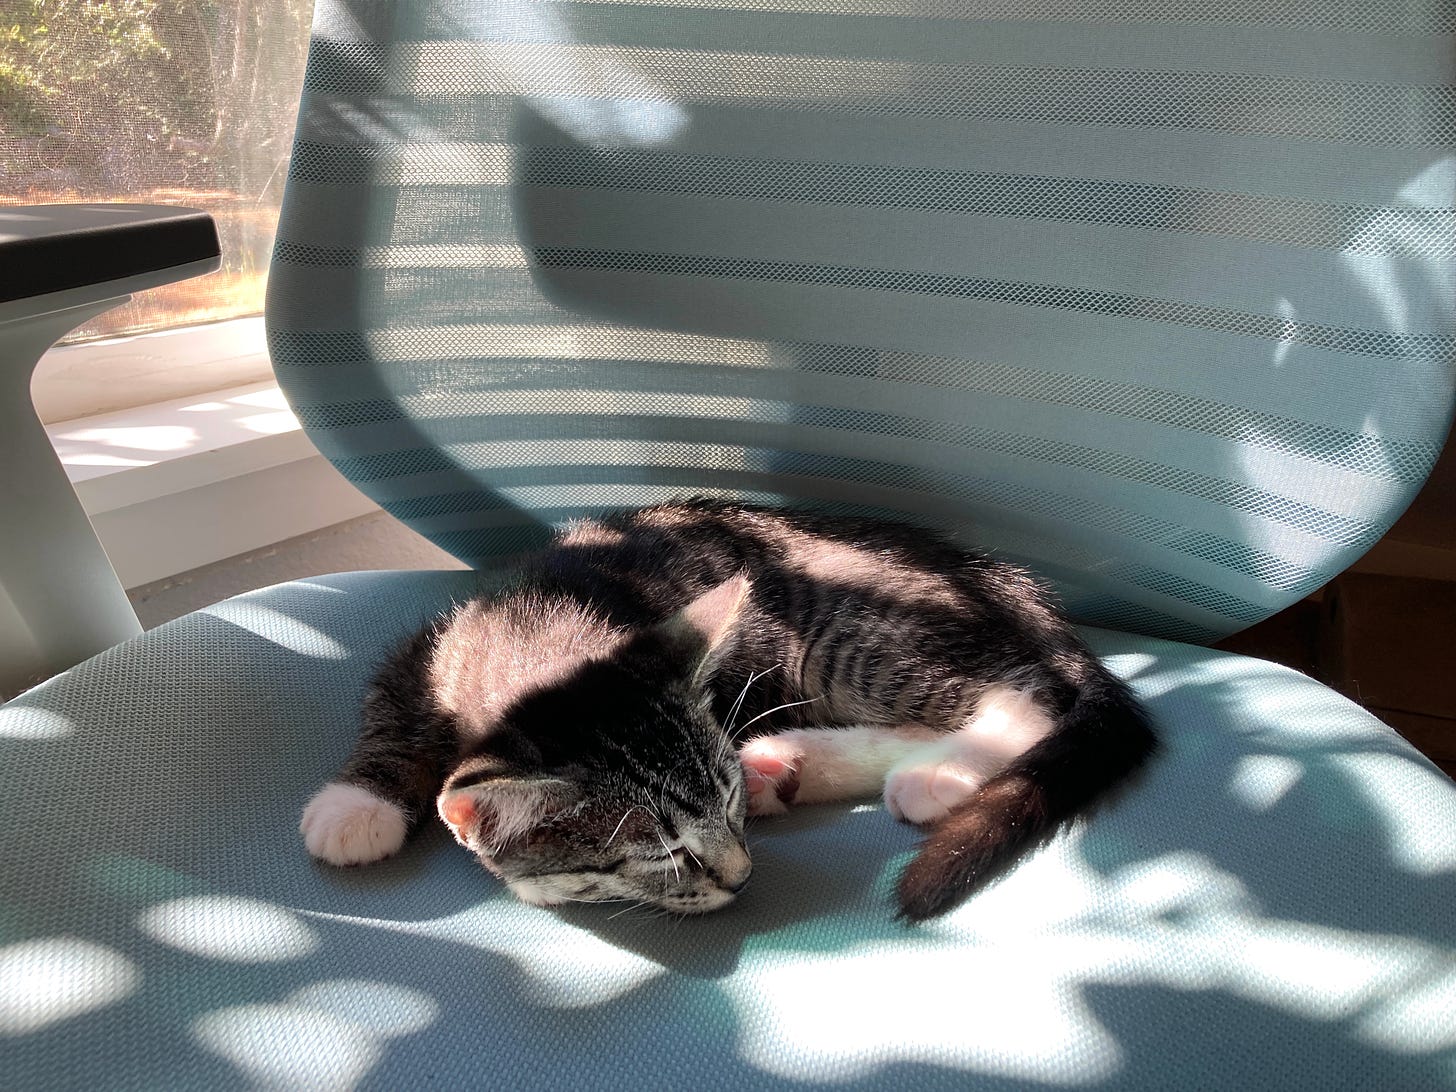 A photo of my "foster fail" kitten sleeping peacefully on my chair